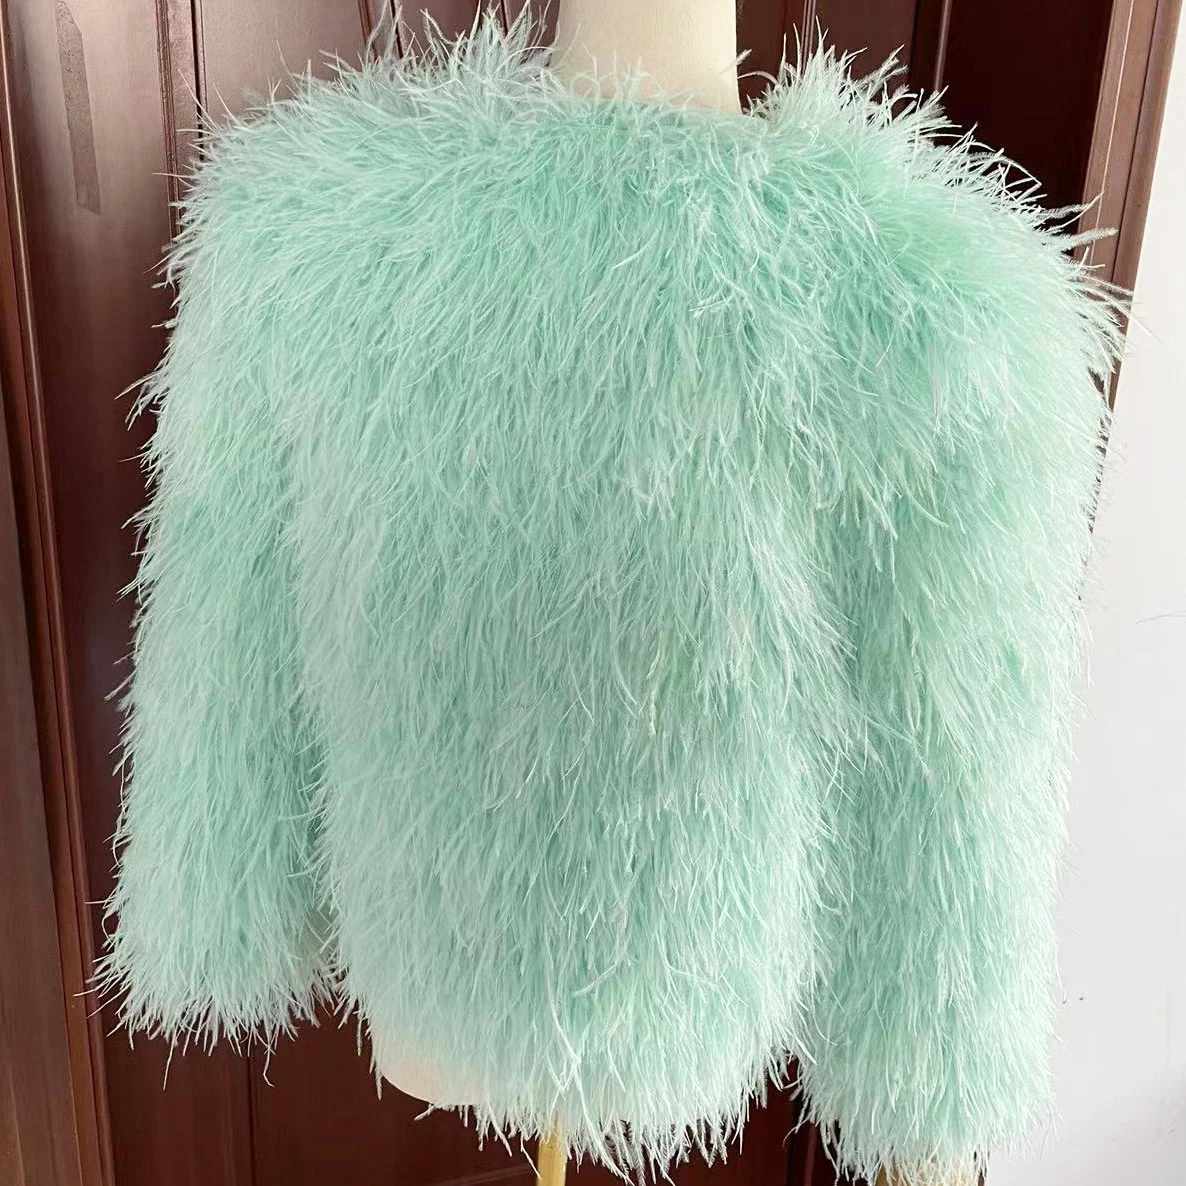 Feather Coat 2022 New Women's Autumn Winter Top Fashion Fur Coat Elegant Thick Warm Jacket Real Fur Coat Women enlarge